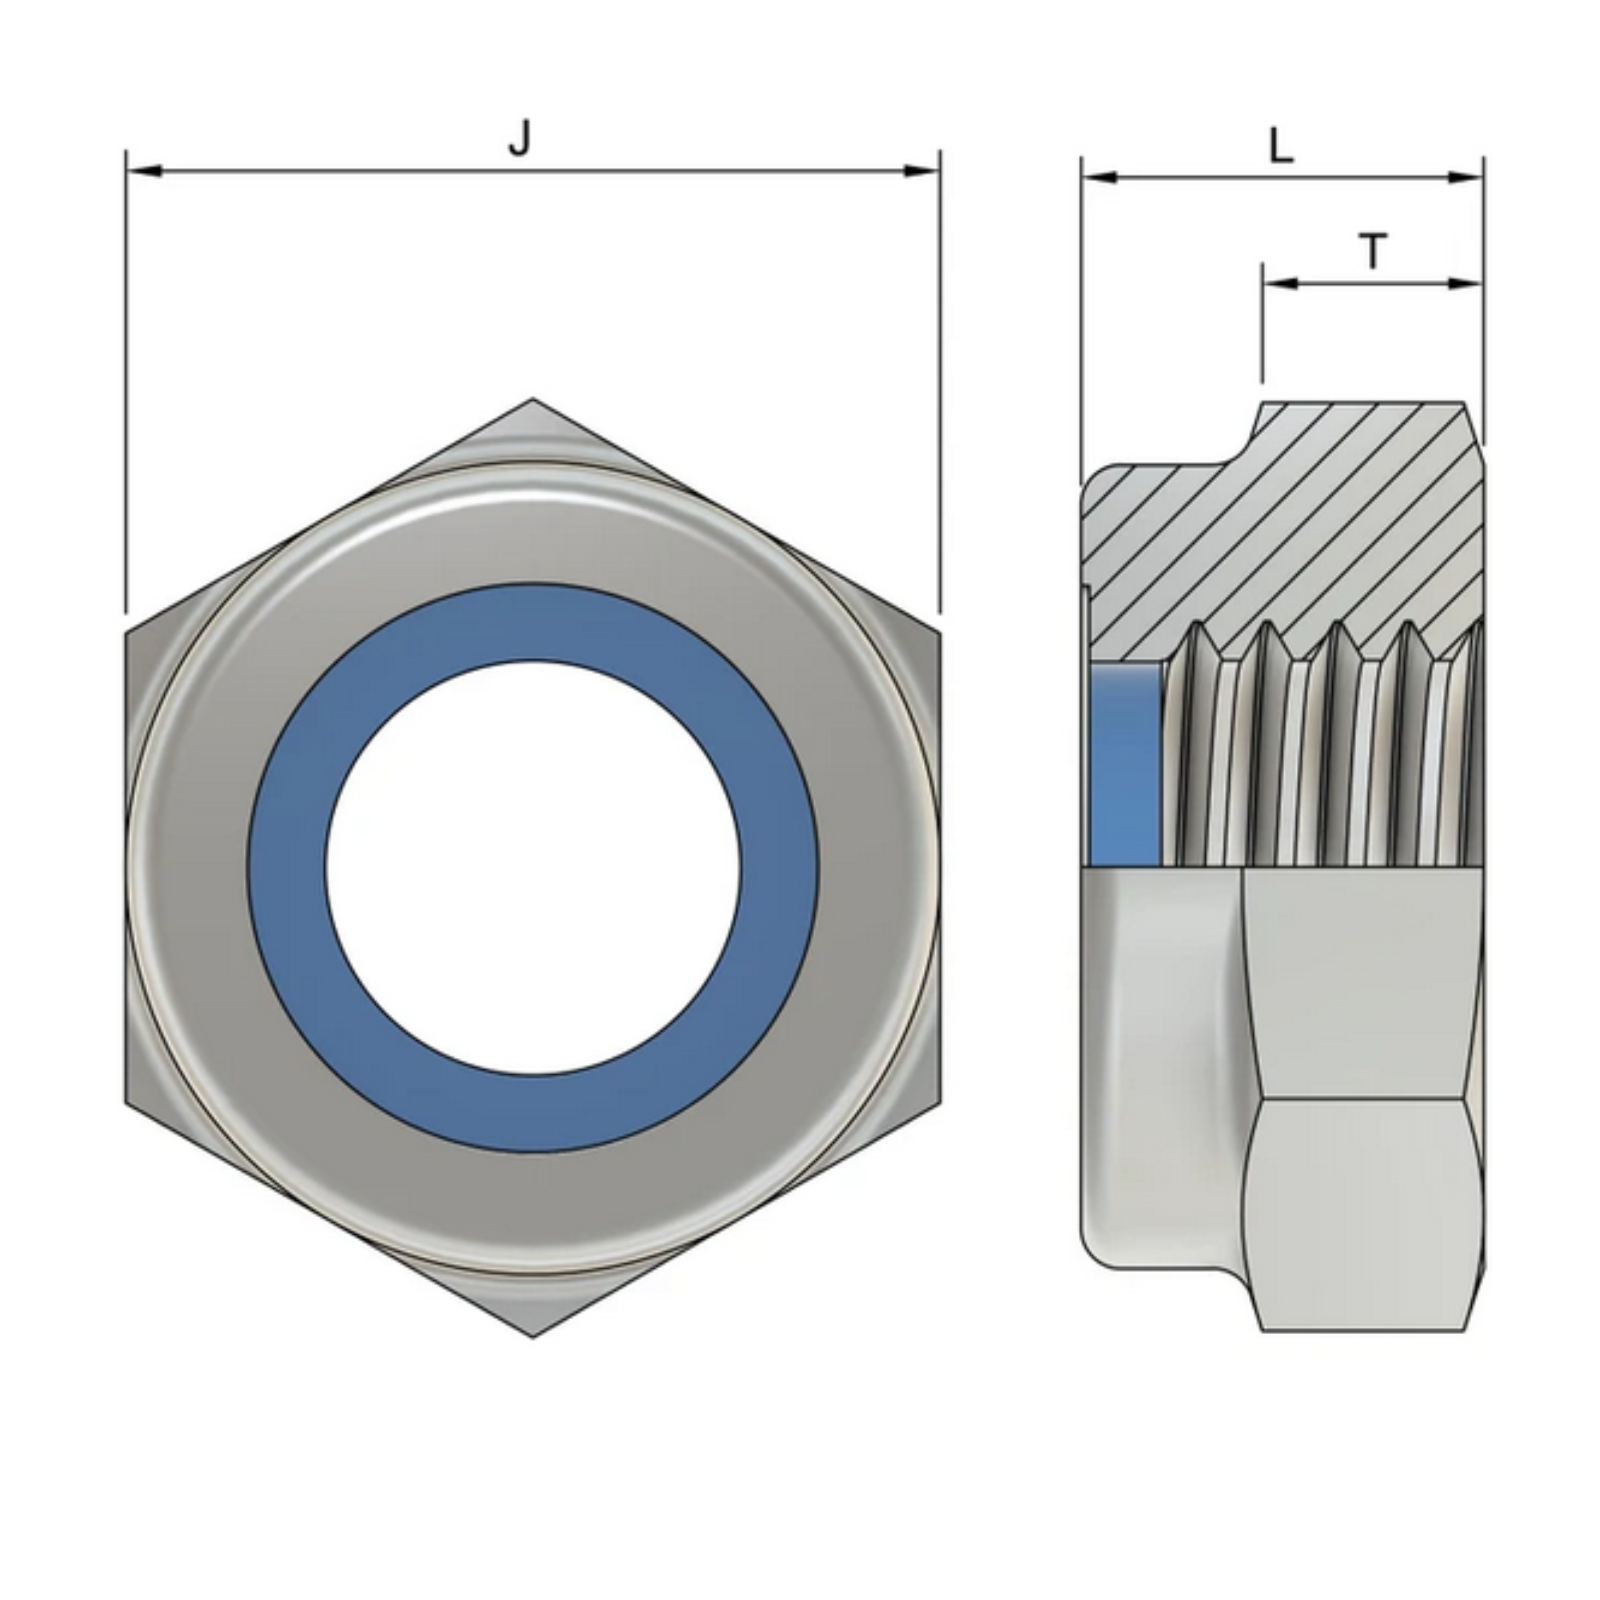 M3 Hexagon Nylon Locking Nuts (DIN 985) - Zinc Plated Steel